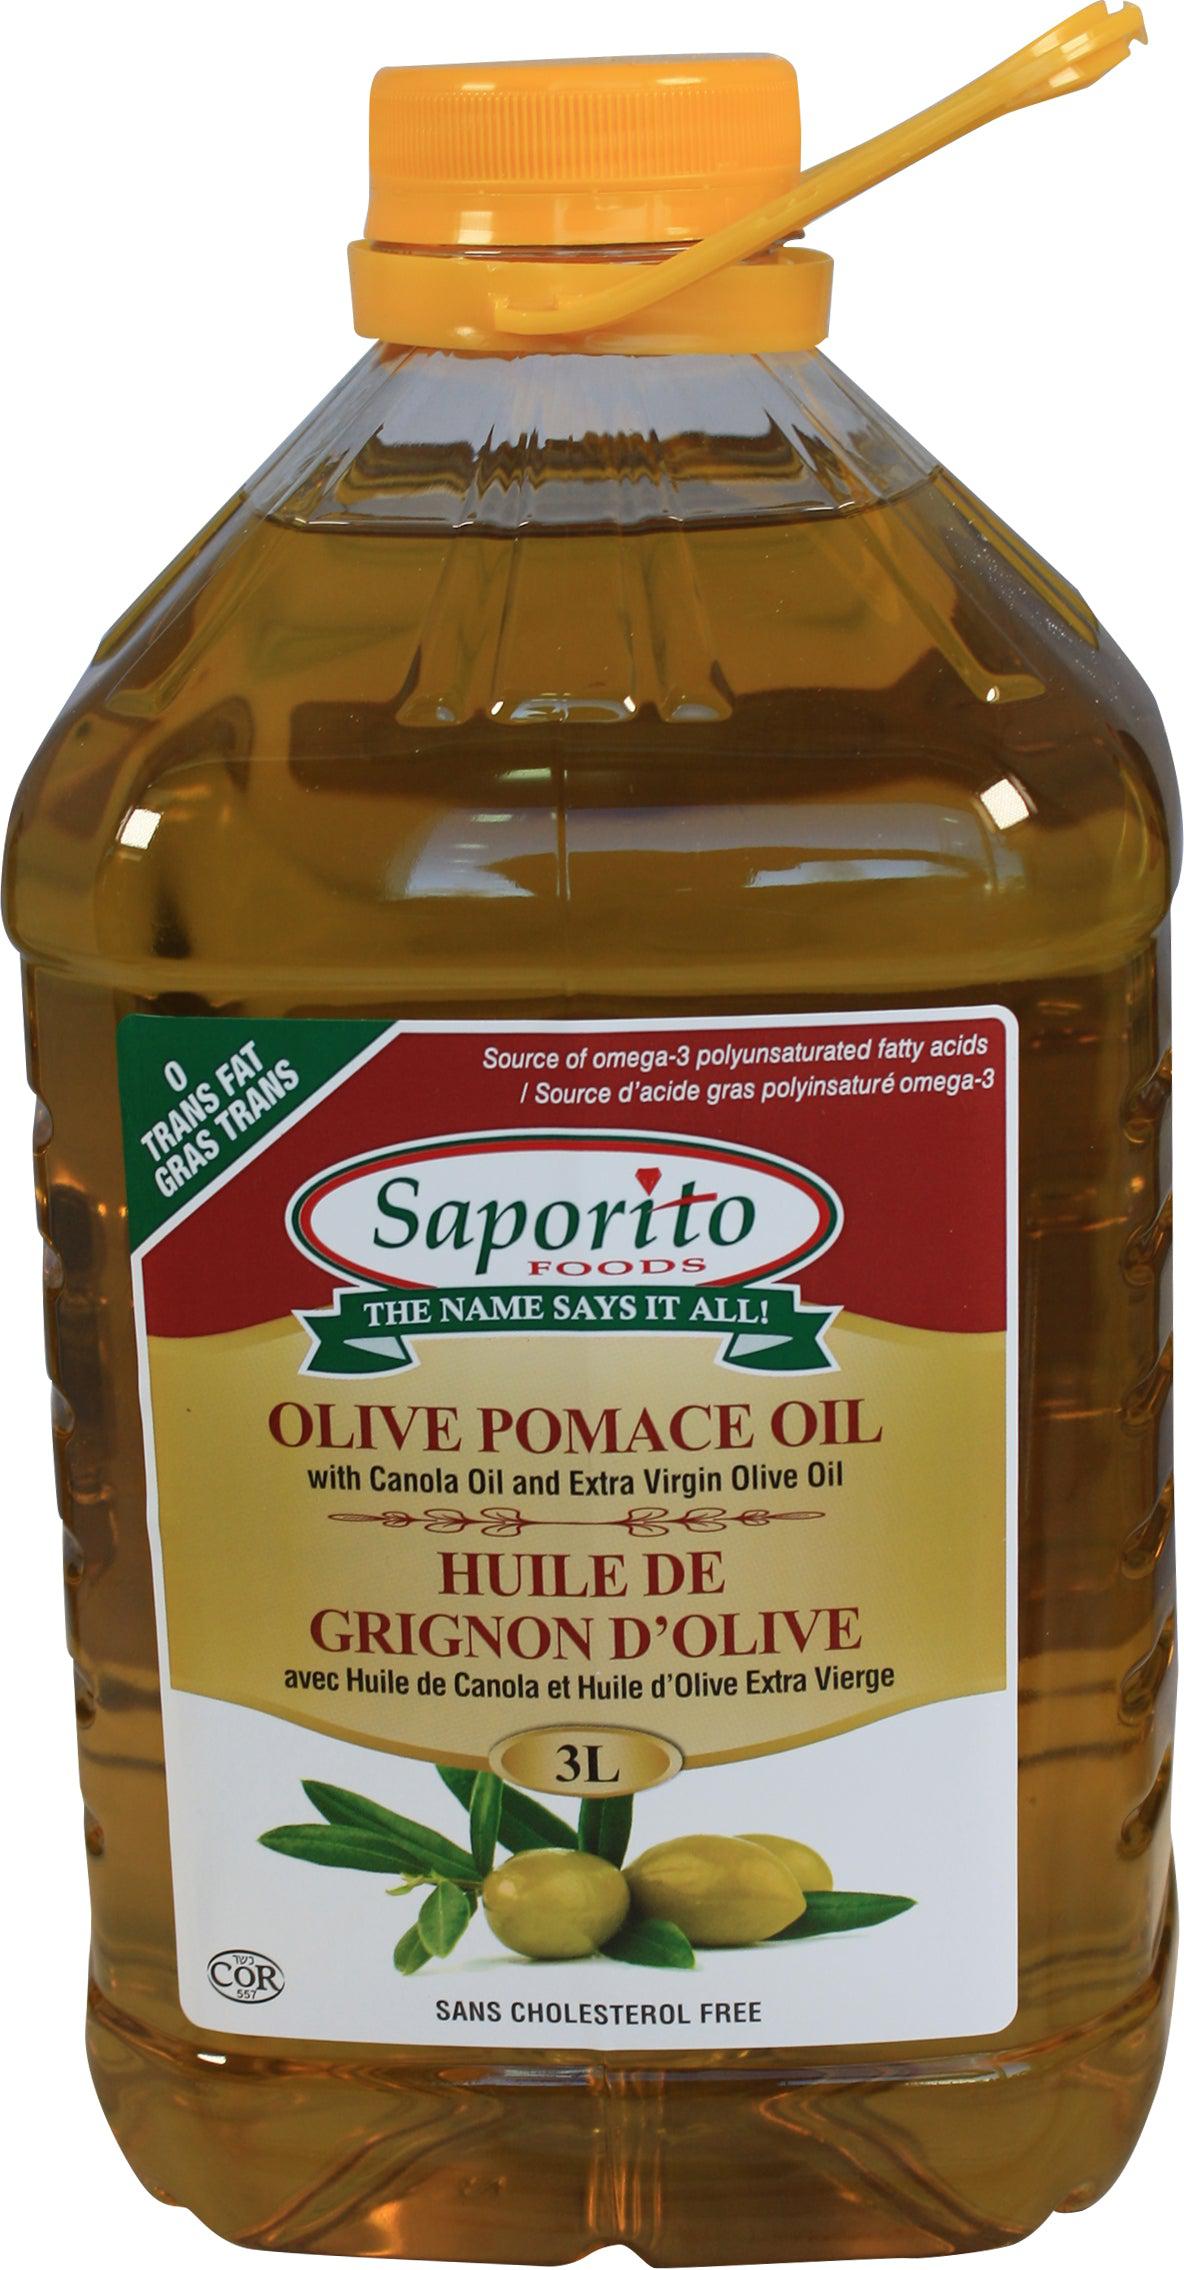 Bulk Olive Pomace Oil Archives - Cocavo